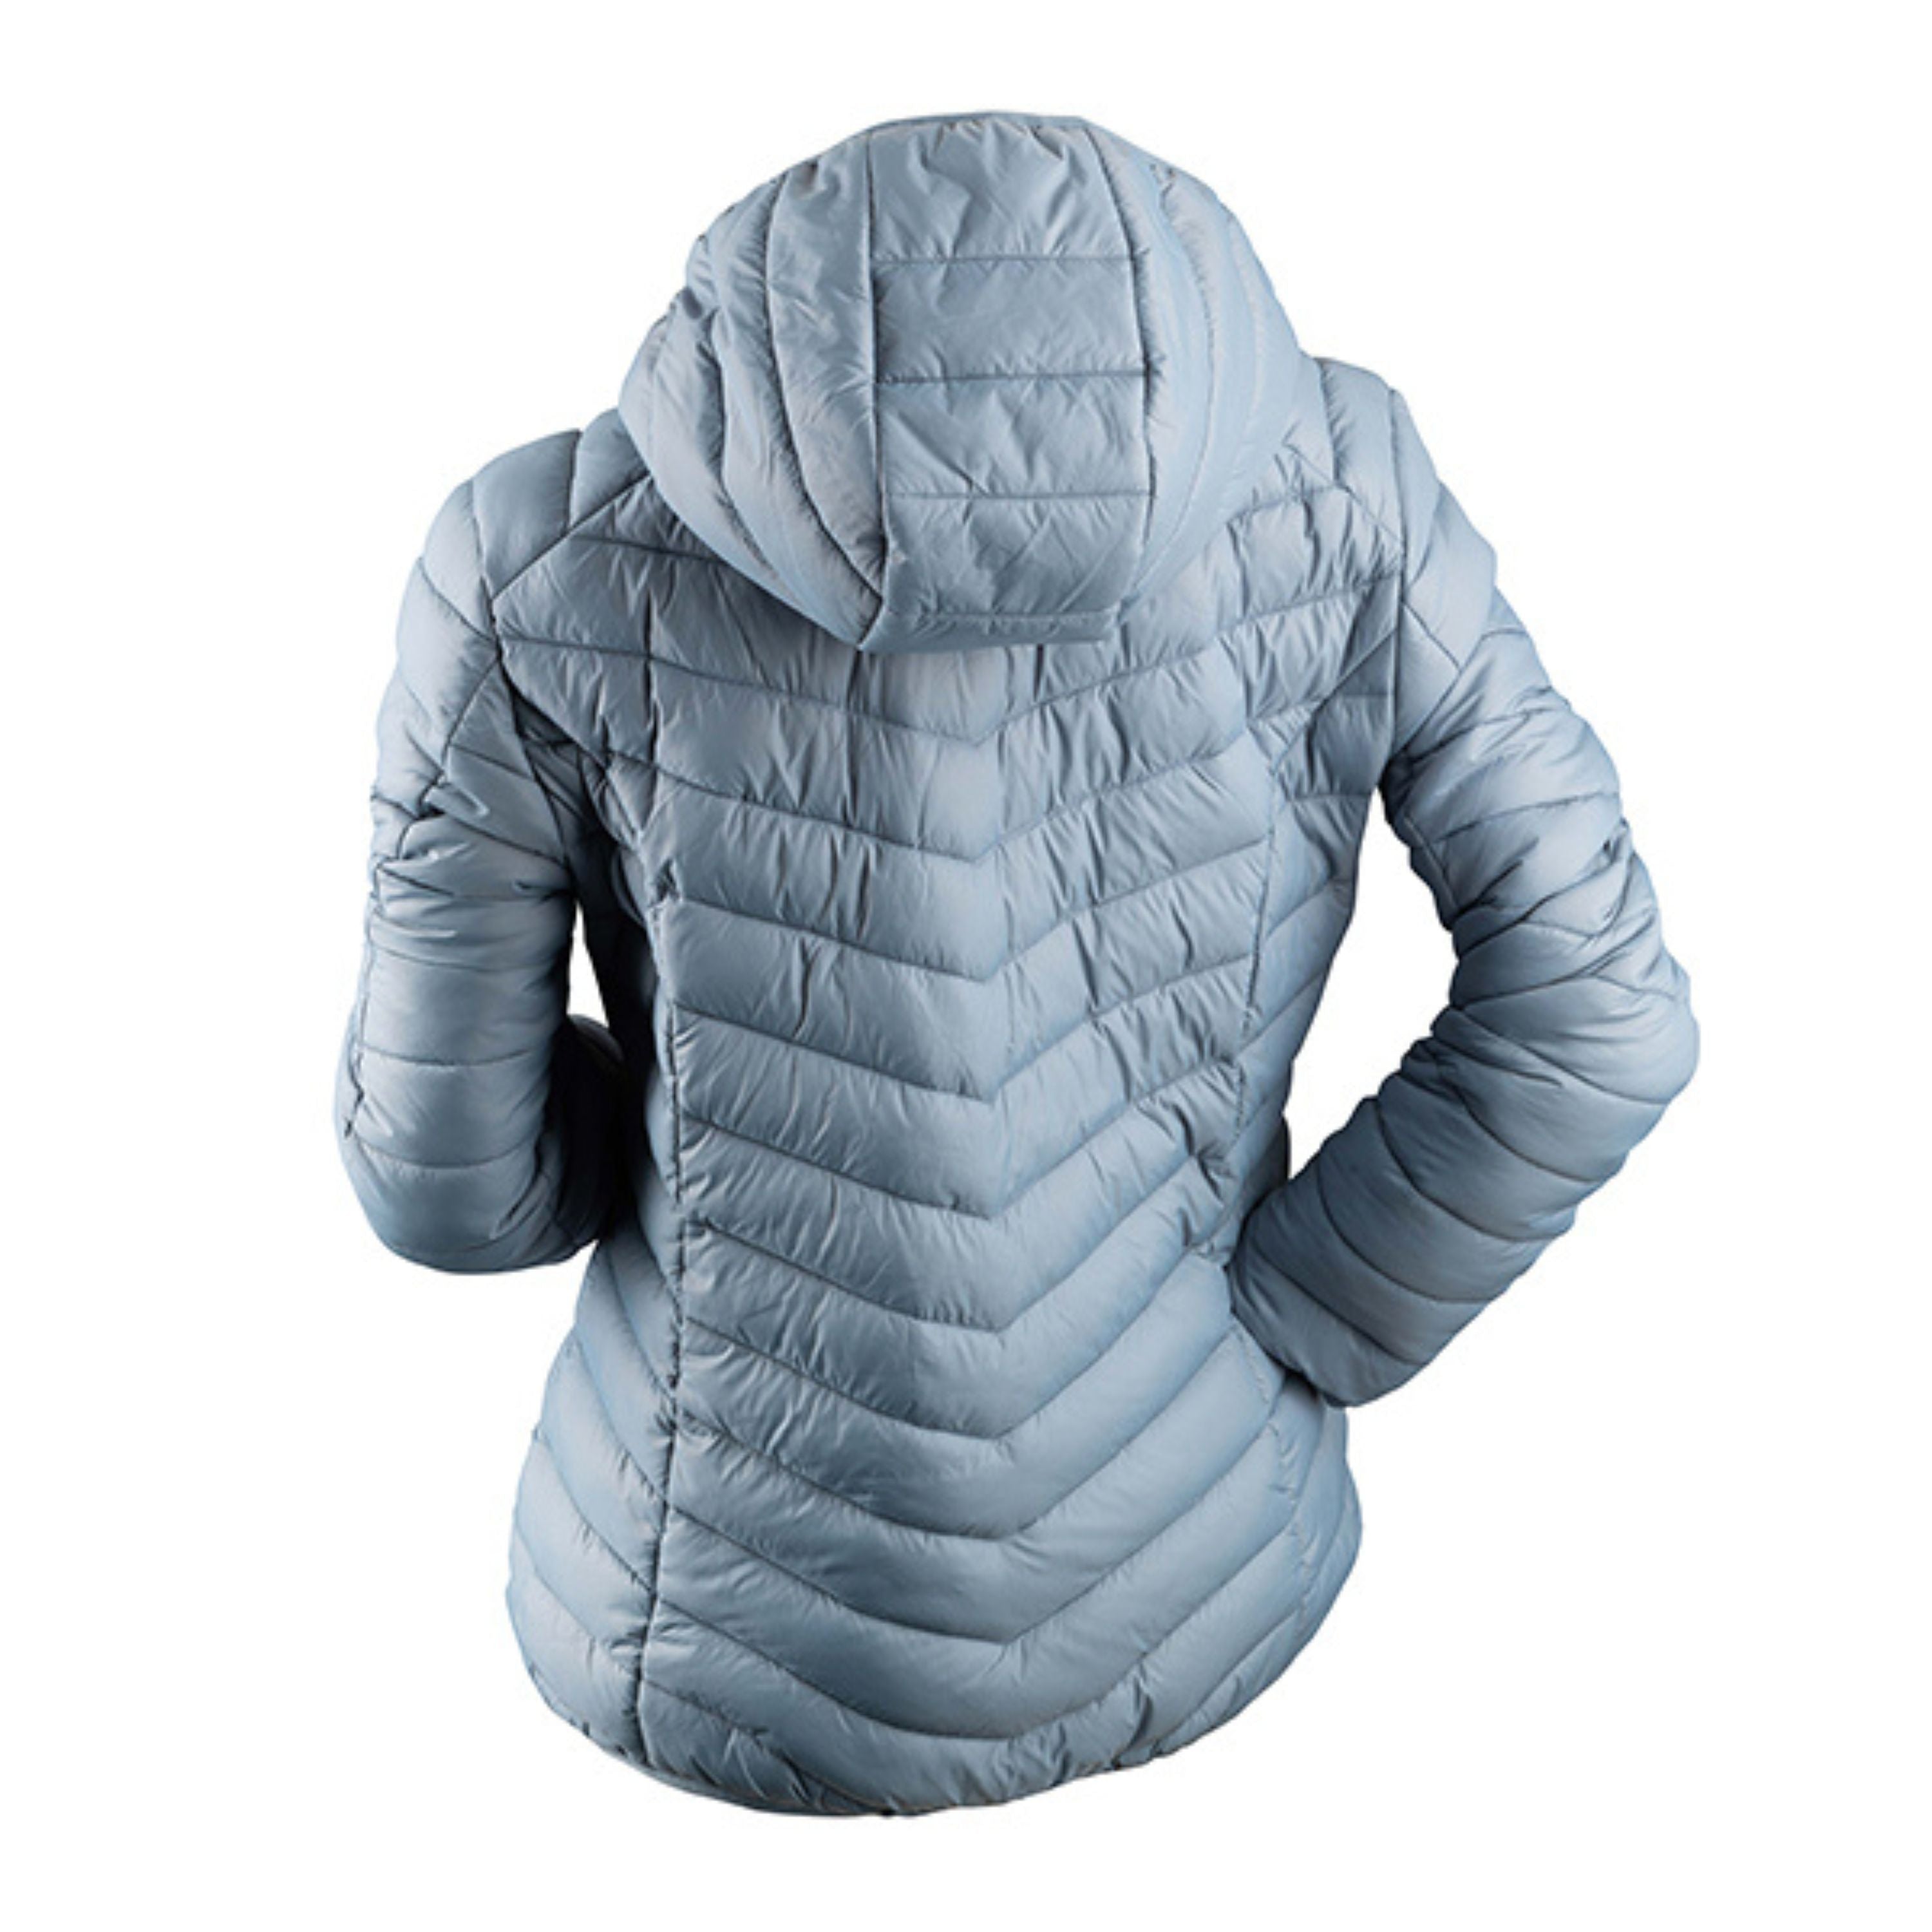 "Travelex" Insulated jacket with hood- Women's